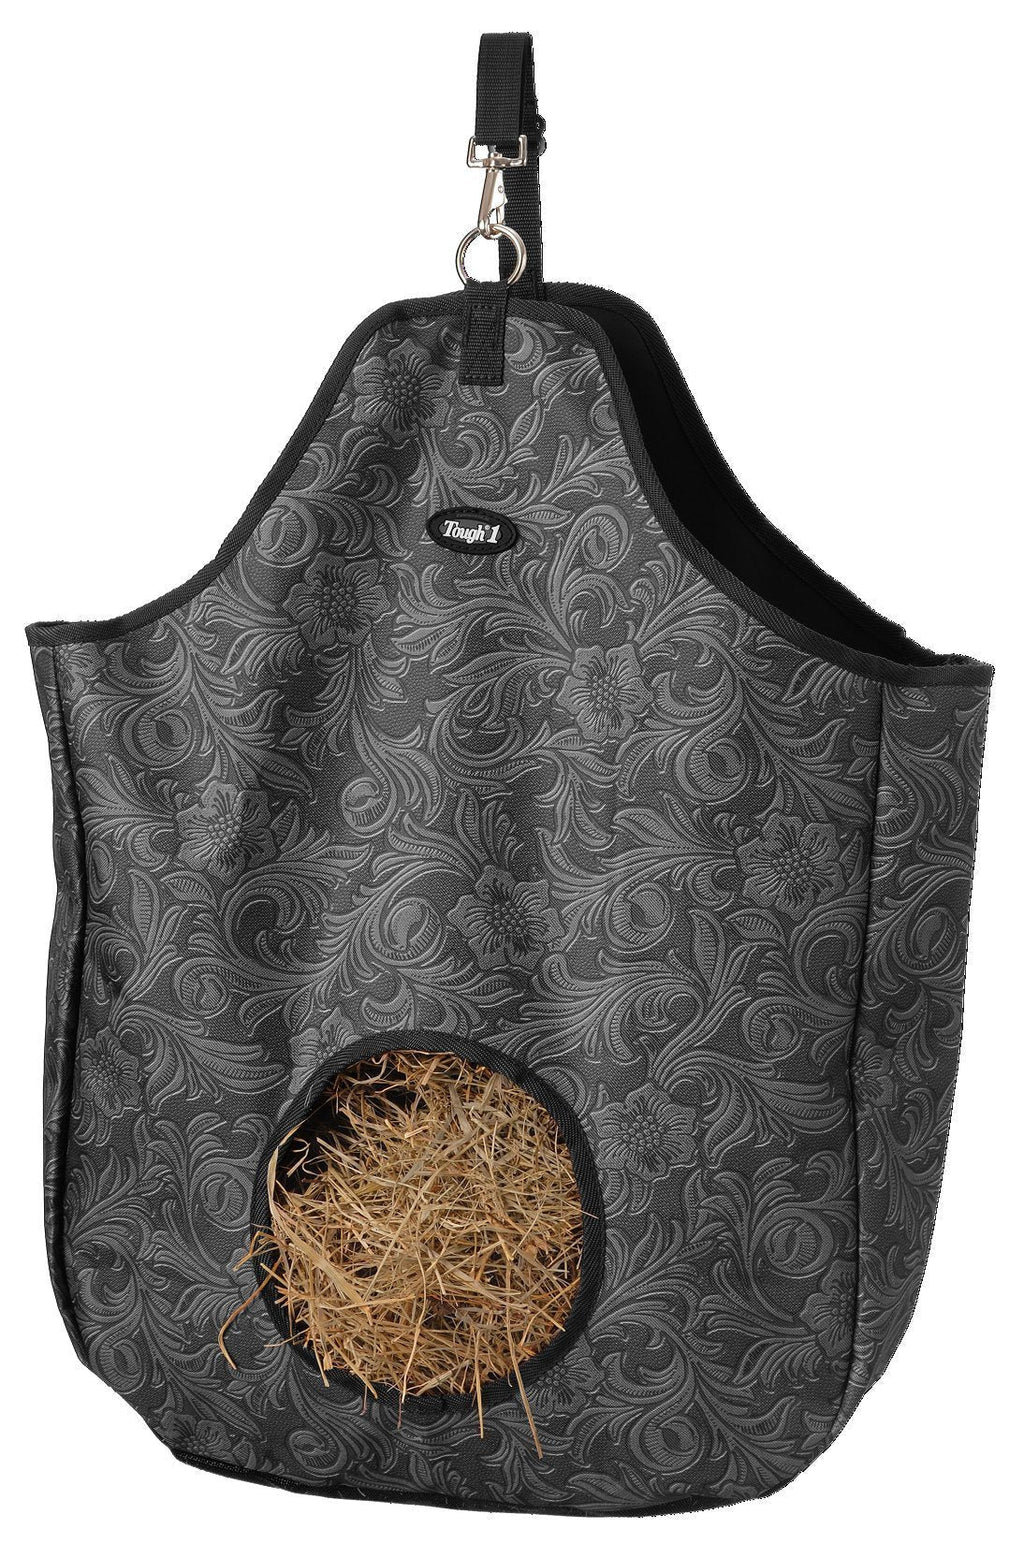 Tough 1 Nylon Hay Tote Bag in Prints Tooled Leather Black - PawsPlanet Australia